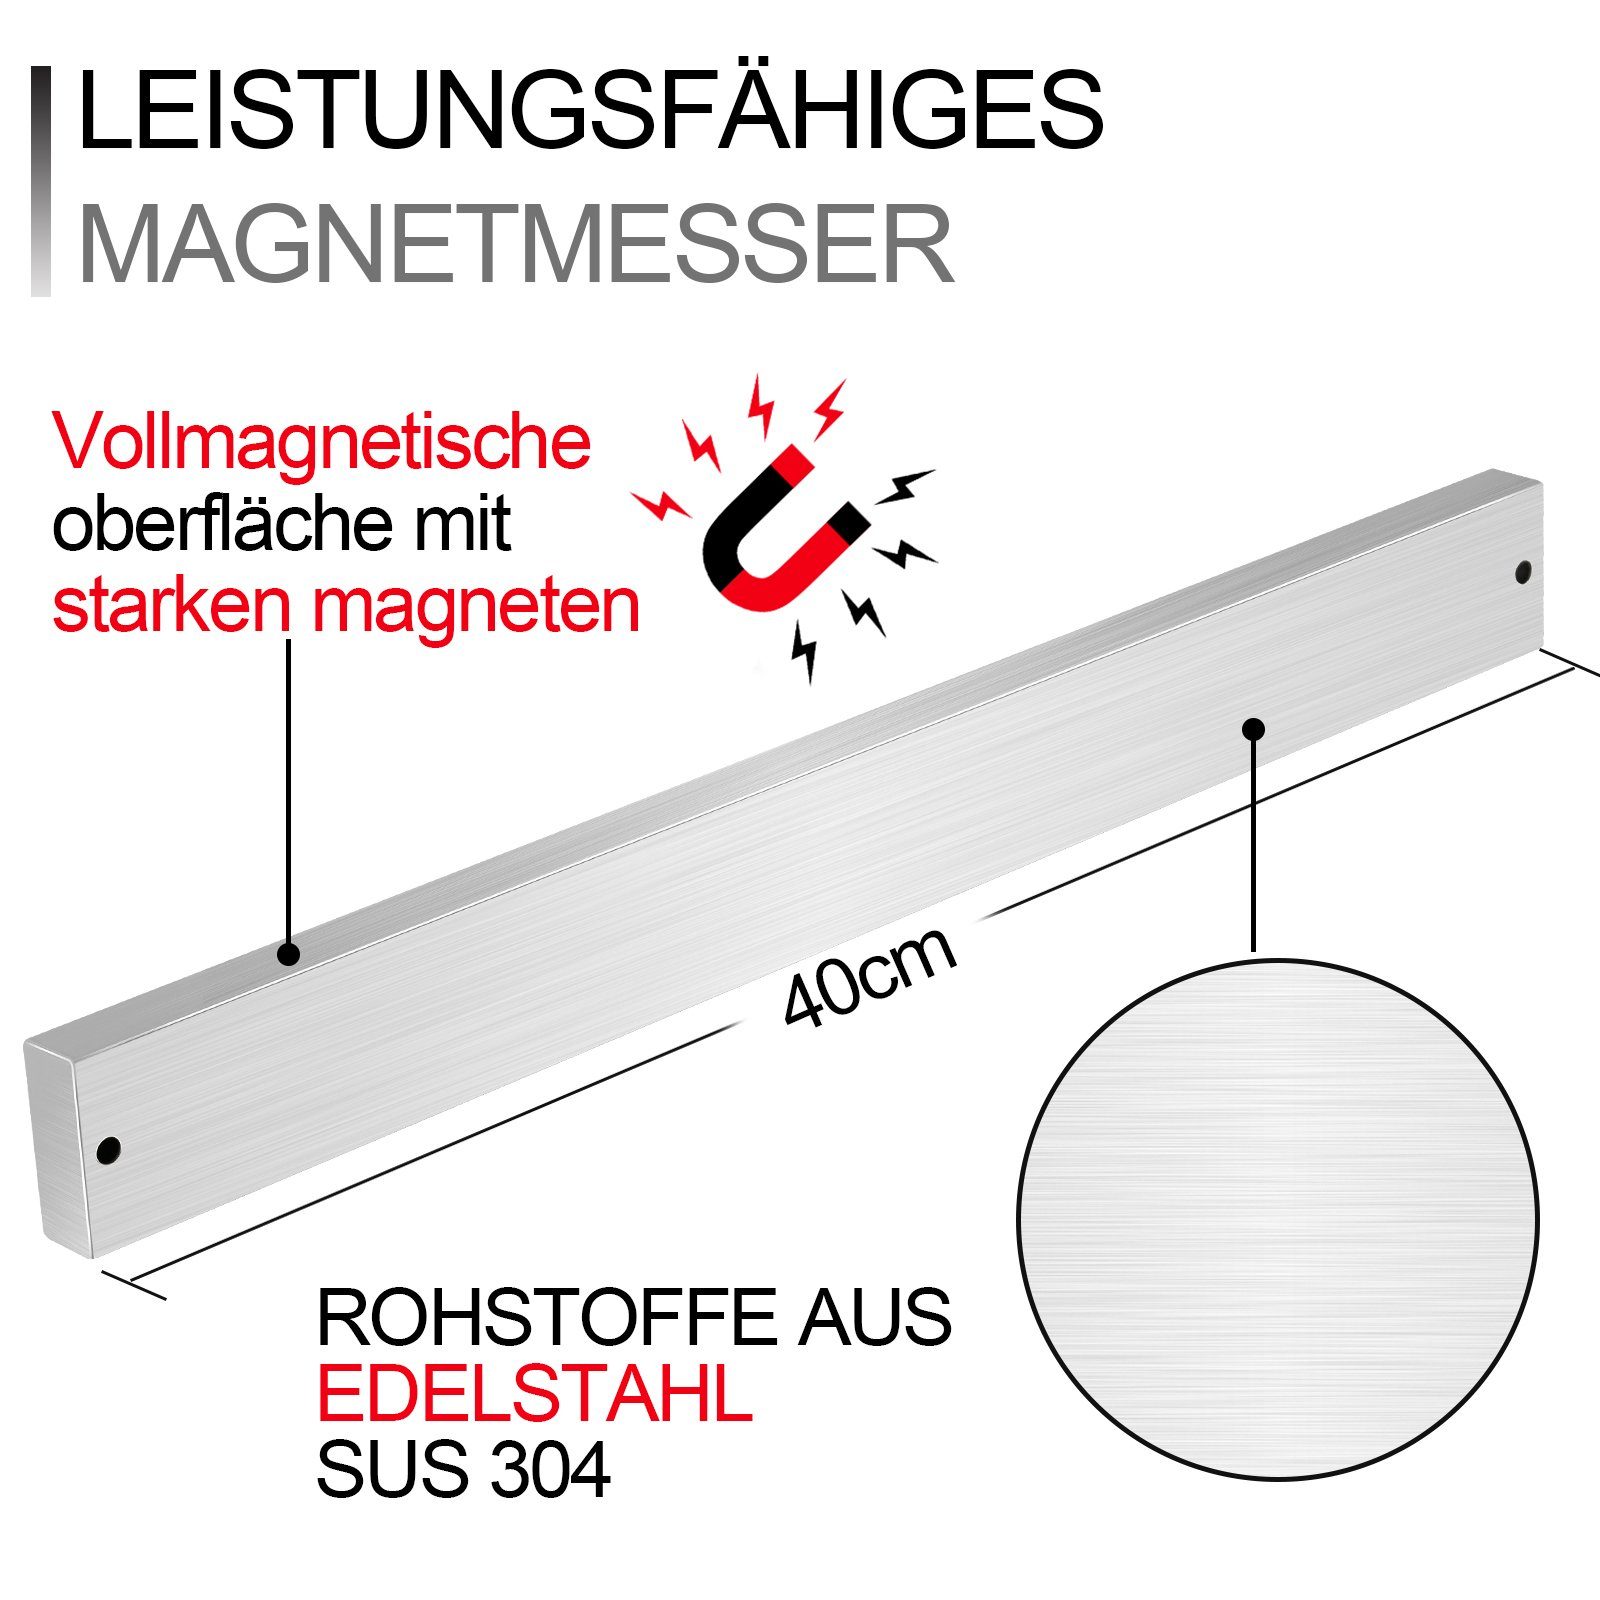 Gimisgu VHB Edelstahl Klebeband 40CM Messerhalter Magnetleiste Messer-Leiste mit Messer (1tlg) 3M Wand-Magnet